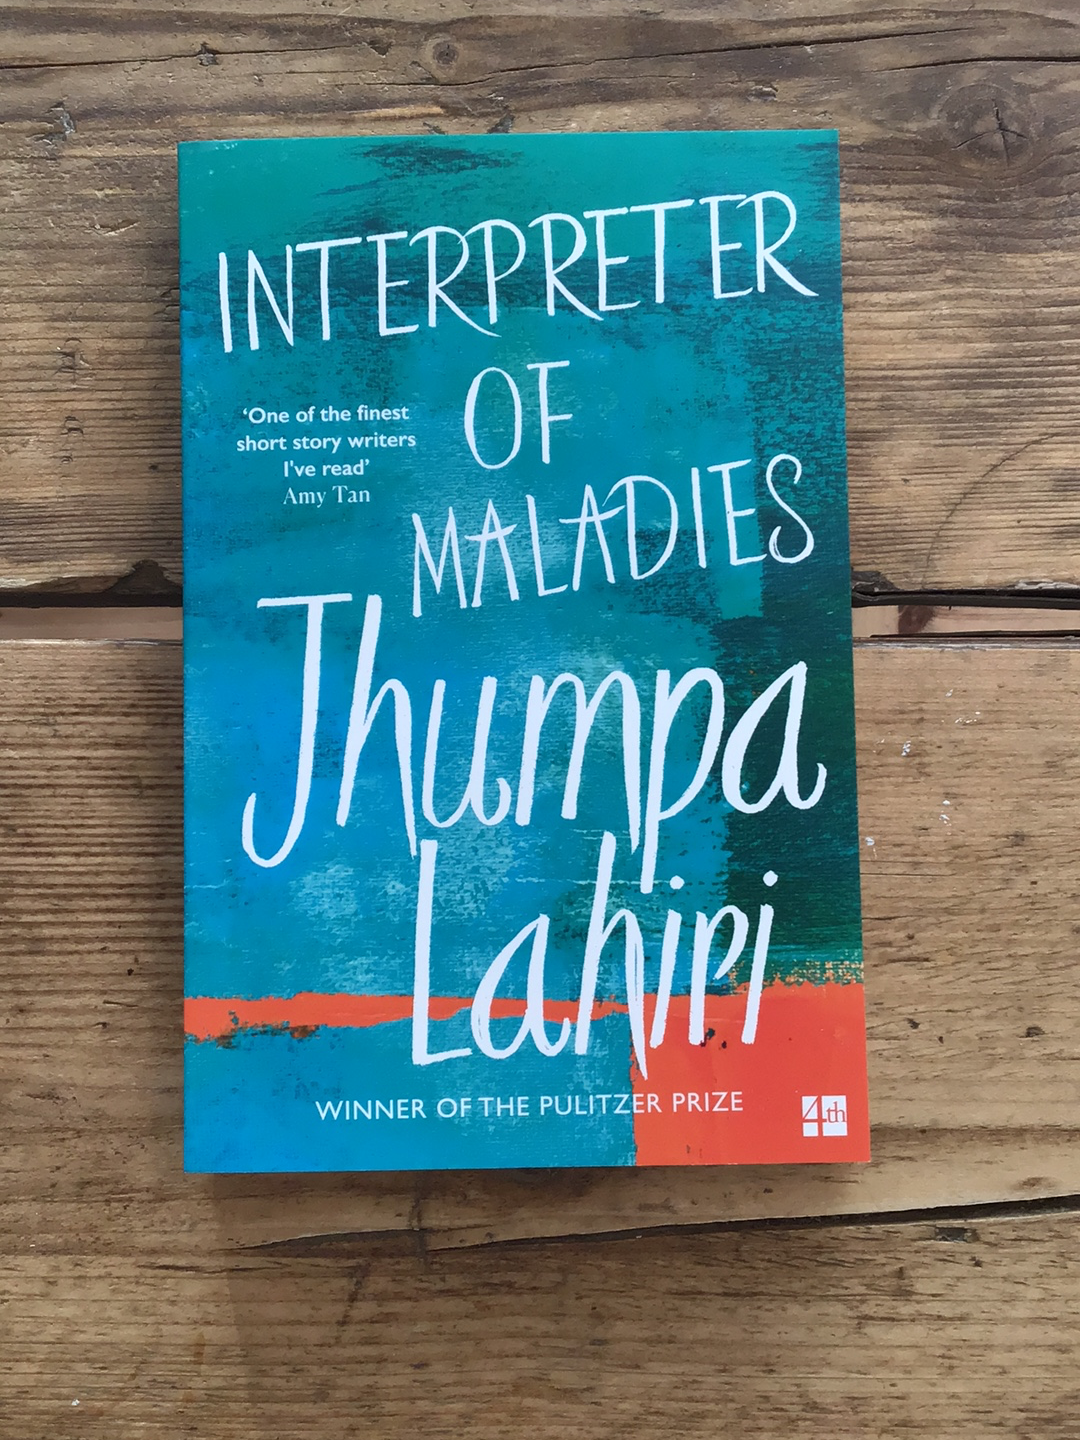 The　Feminist　of　Interpreter　–　Maladies　Bookshop